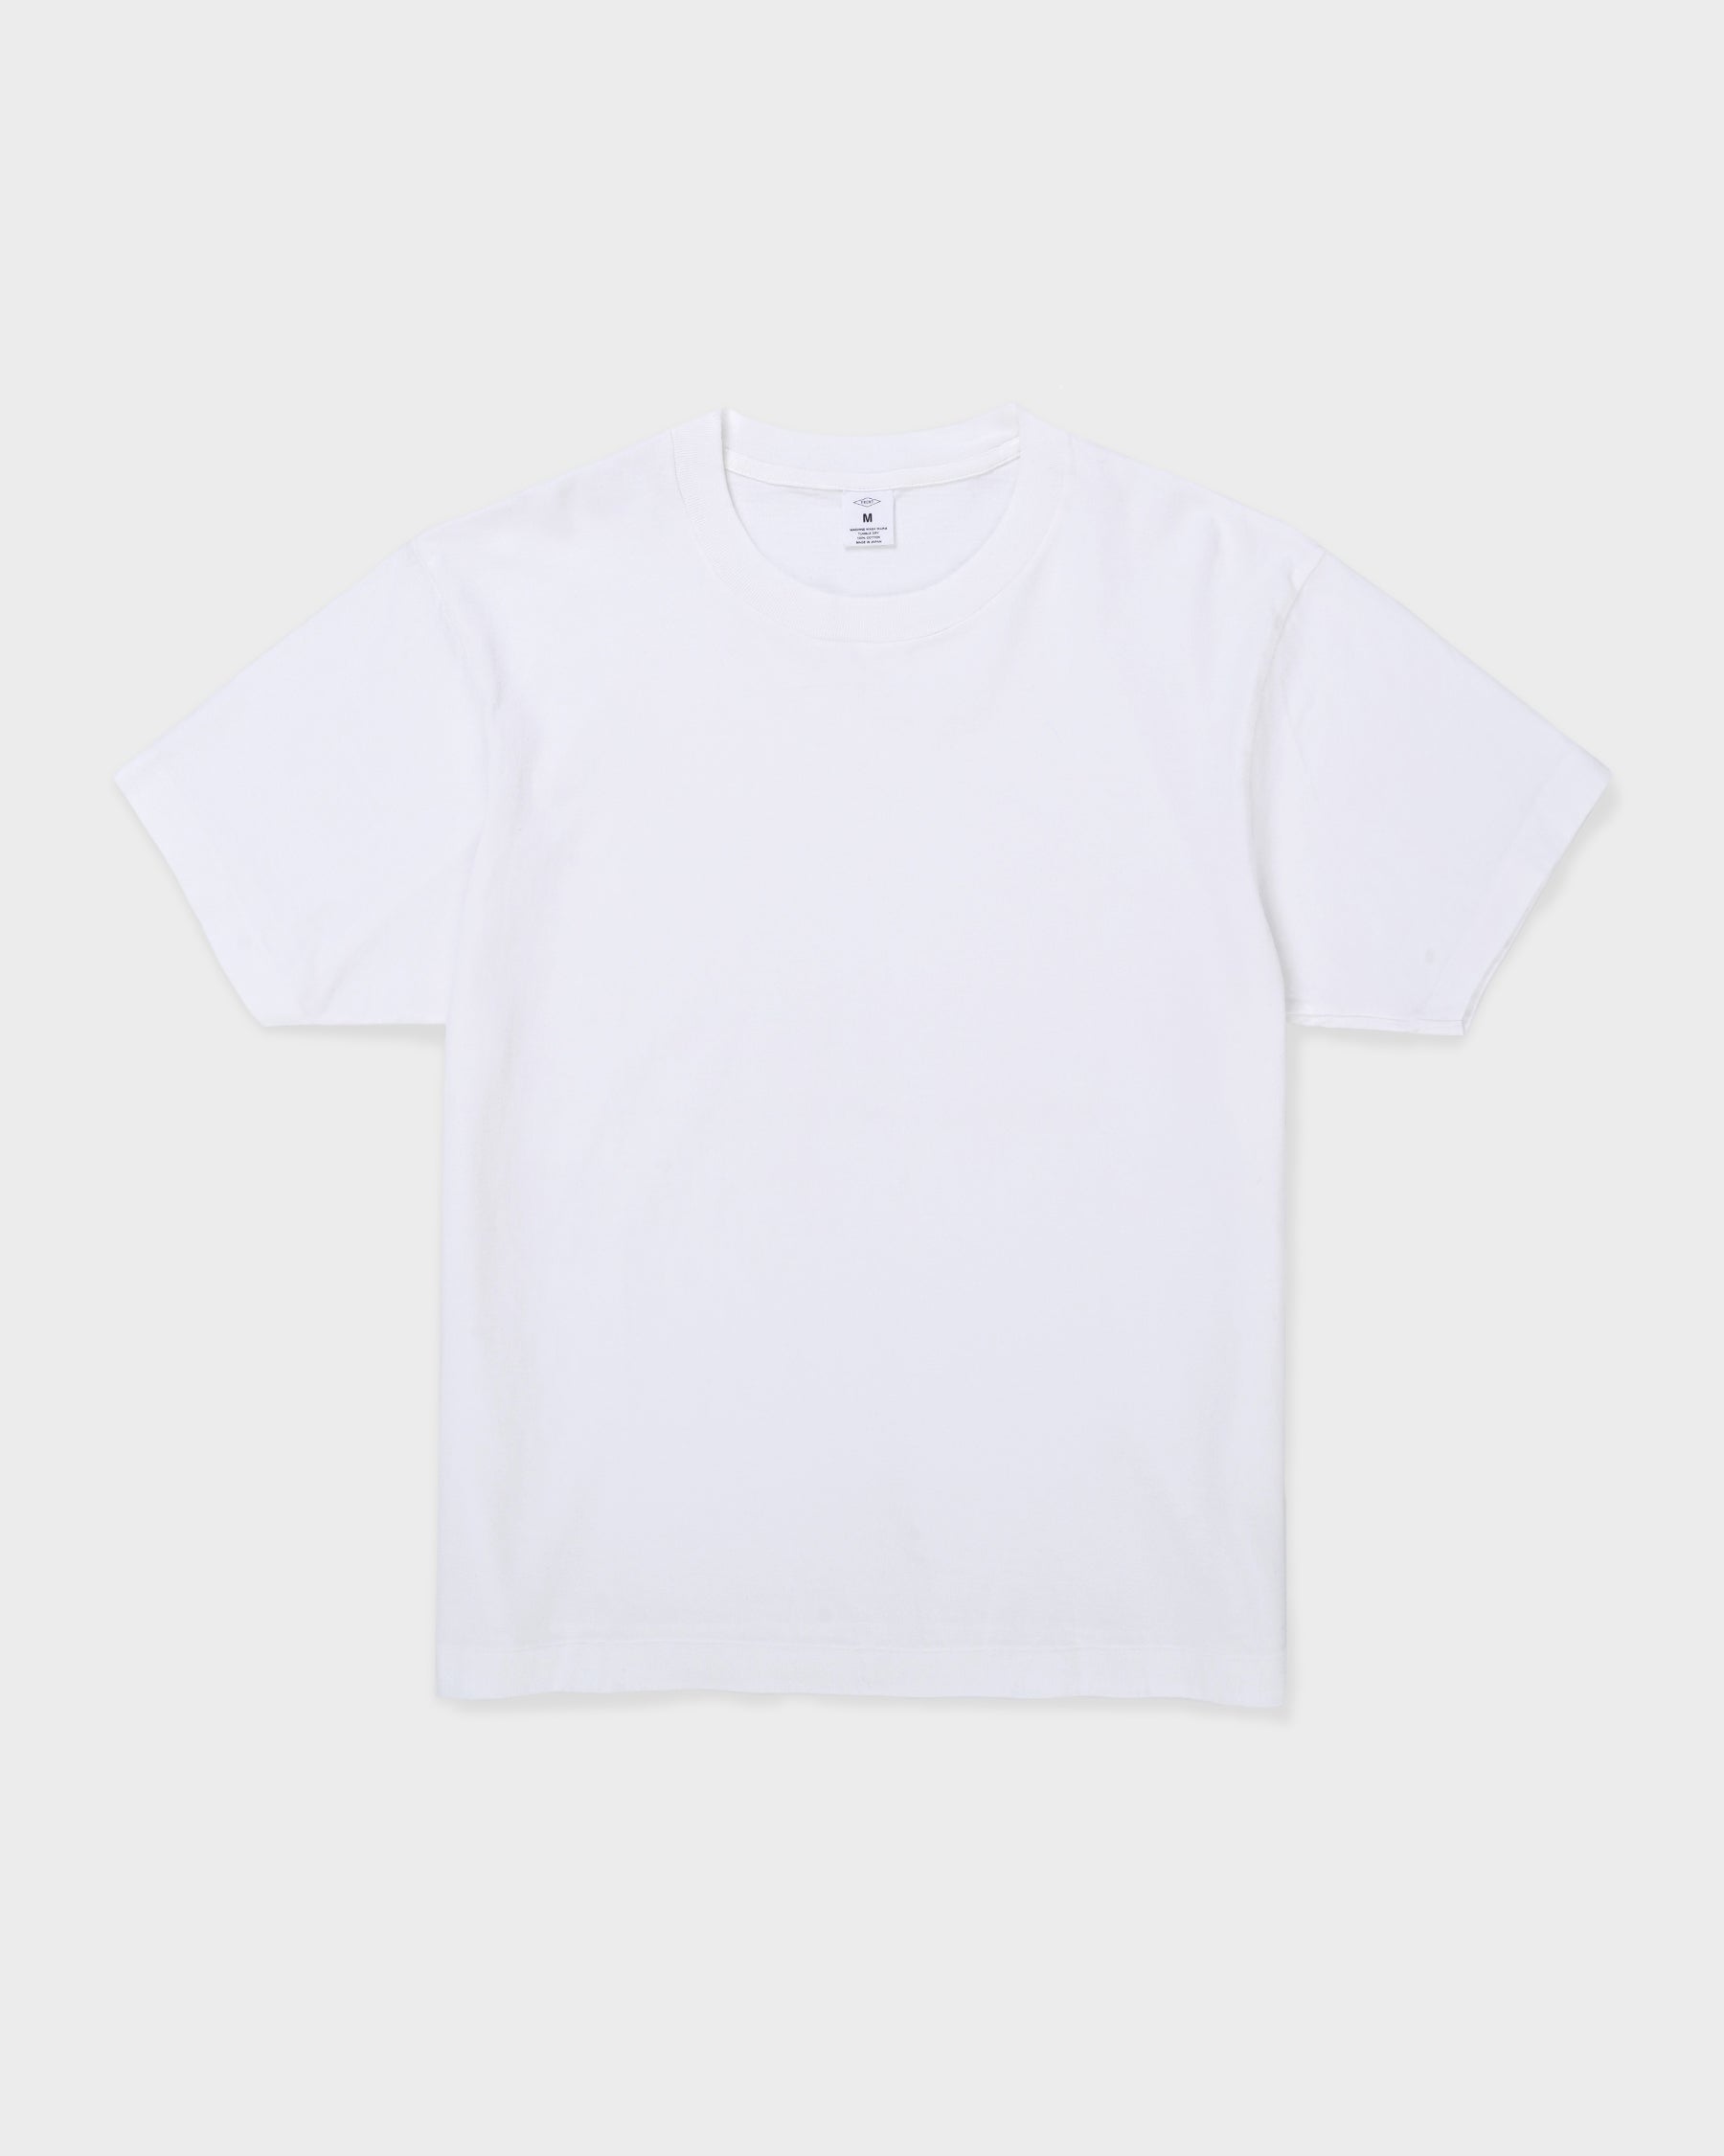 3-Pack Soft T-shirts White T-shirts White (You Save 15%)